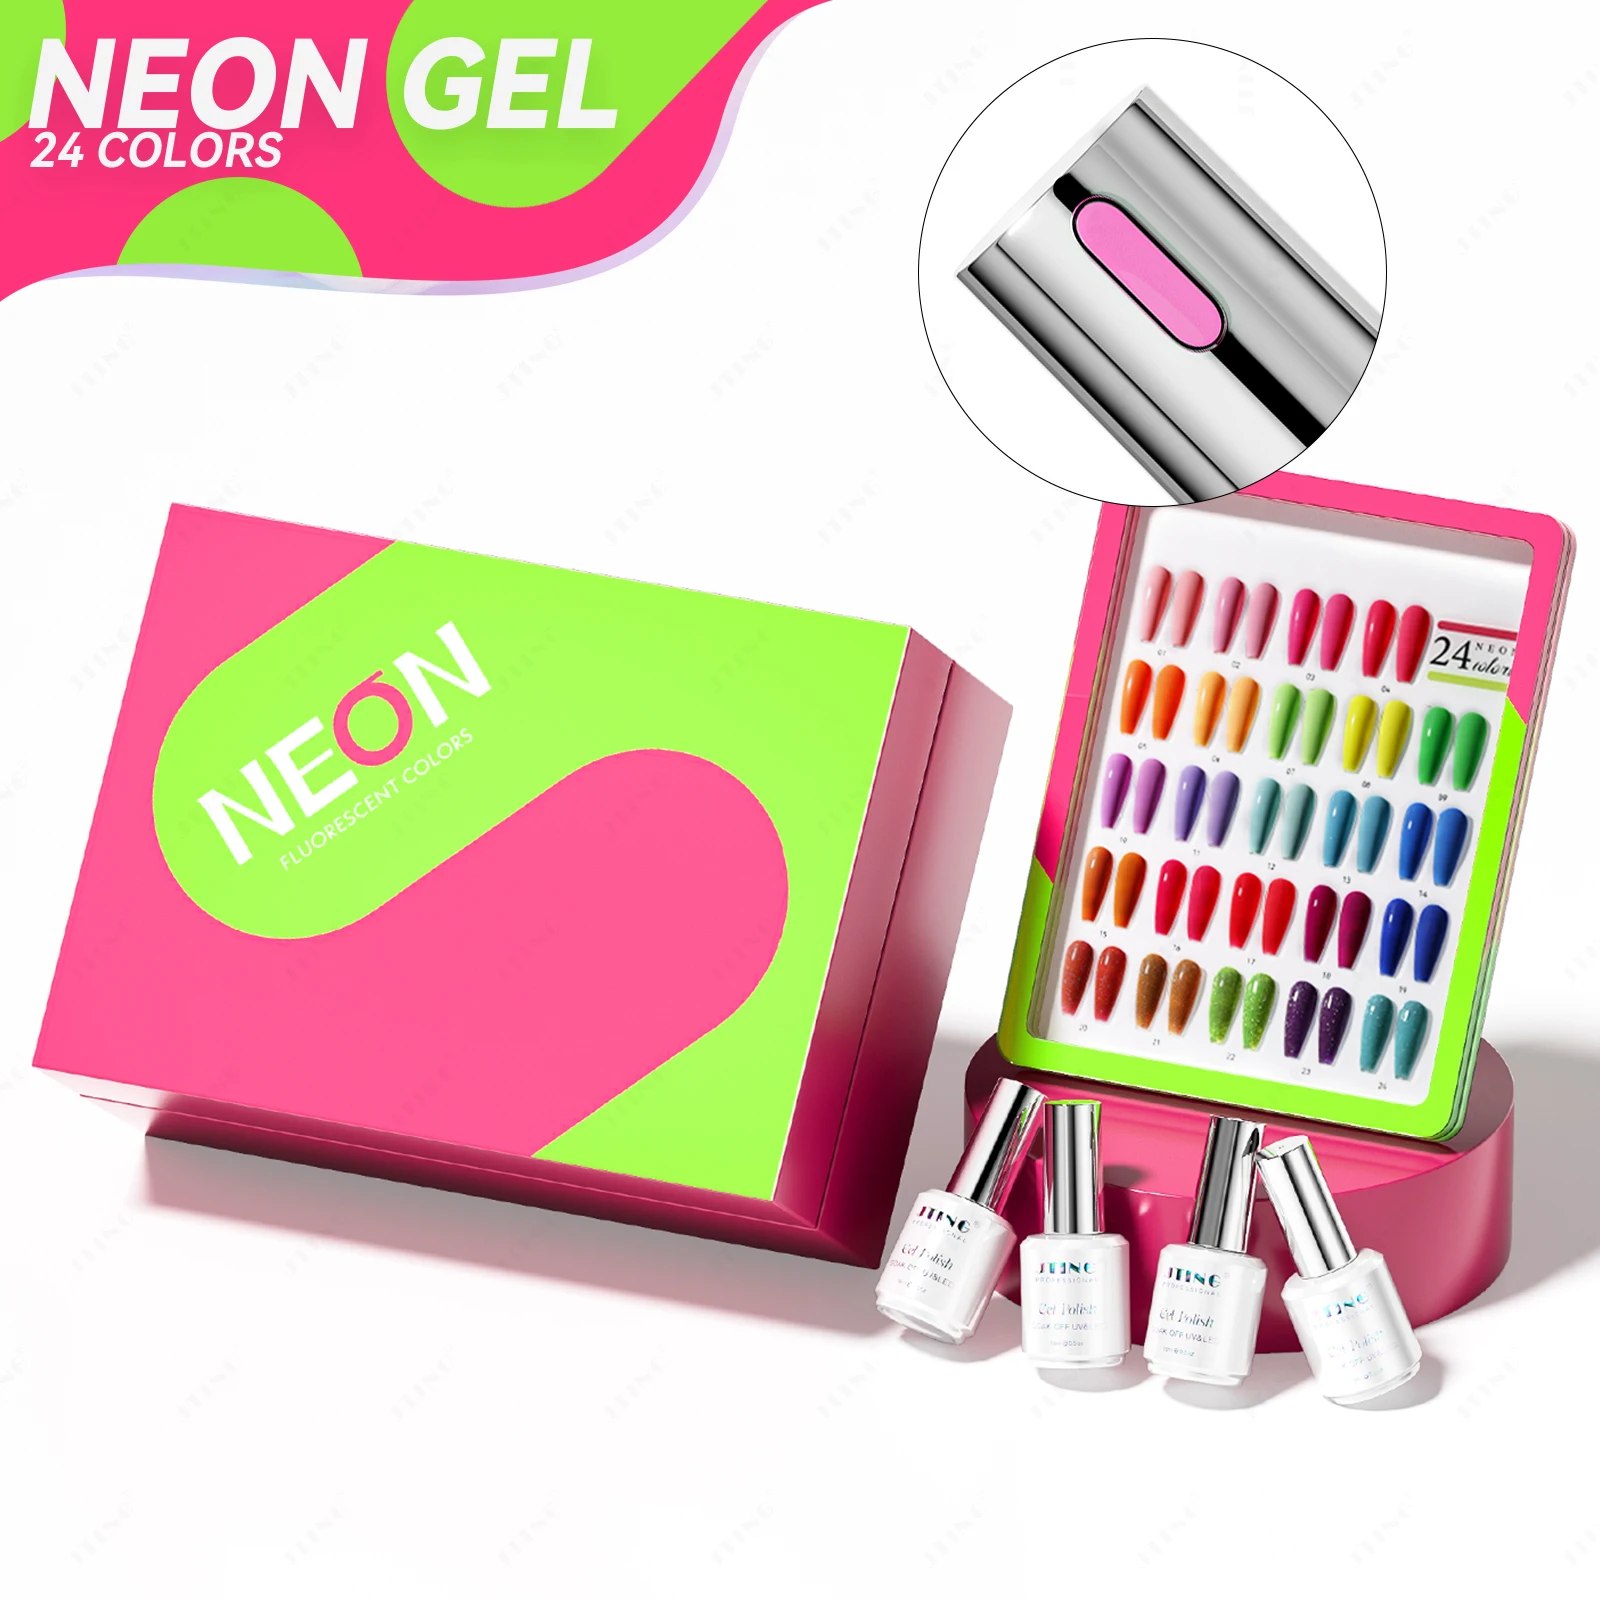 

JTING New launch flash sale gel collection 24color set box Neon gel polish Vegan high pigment nail polish with unique color book